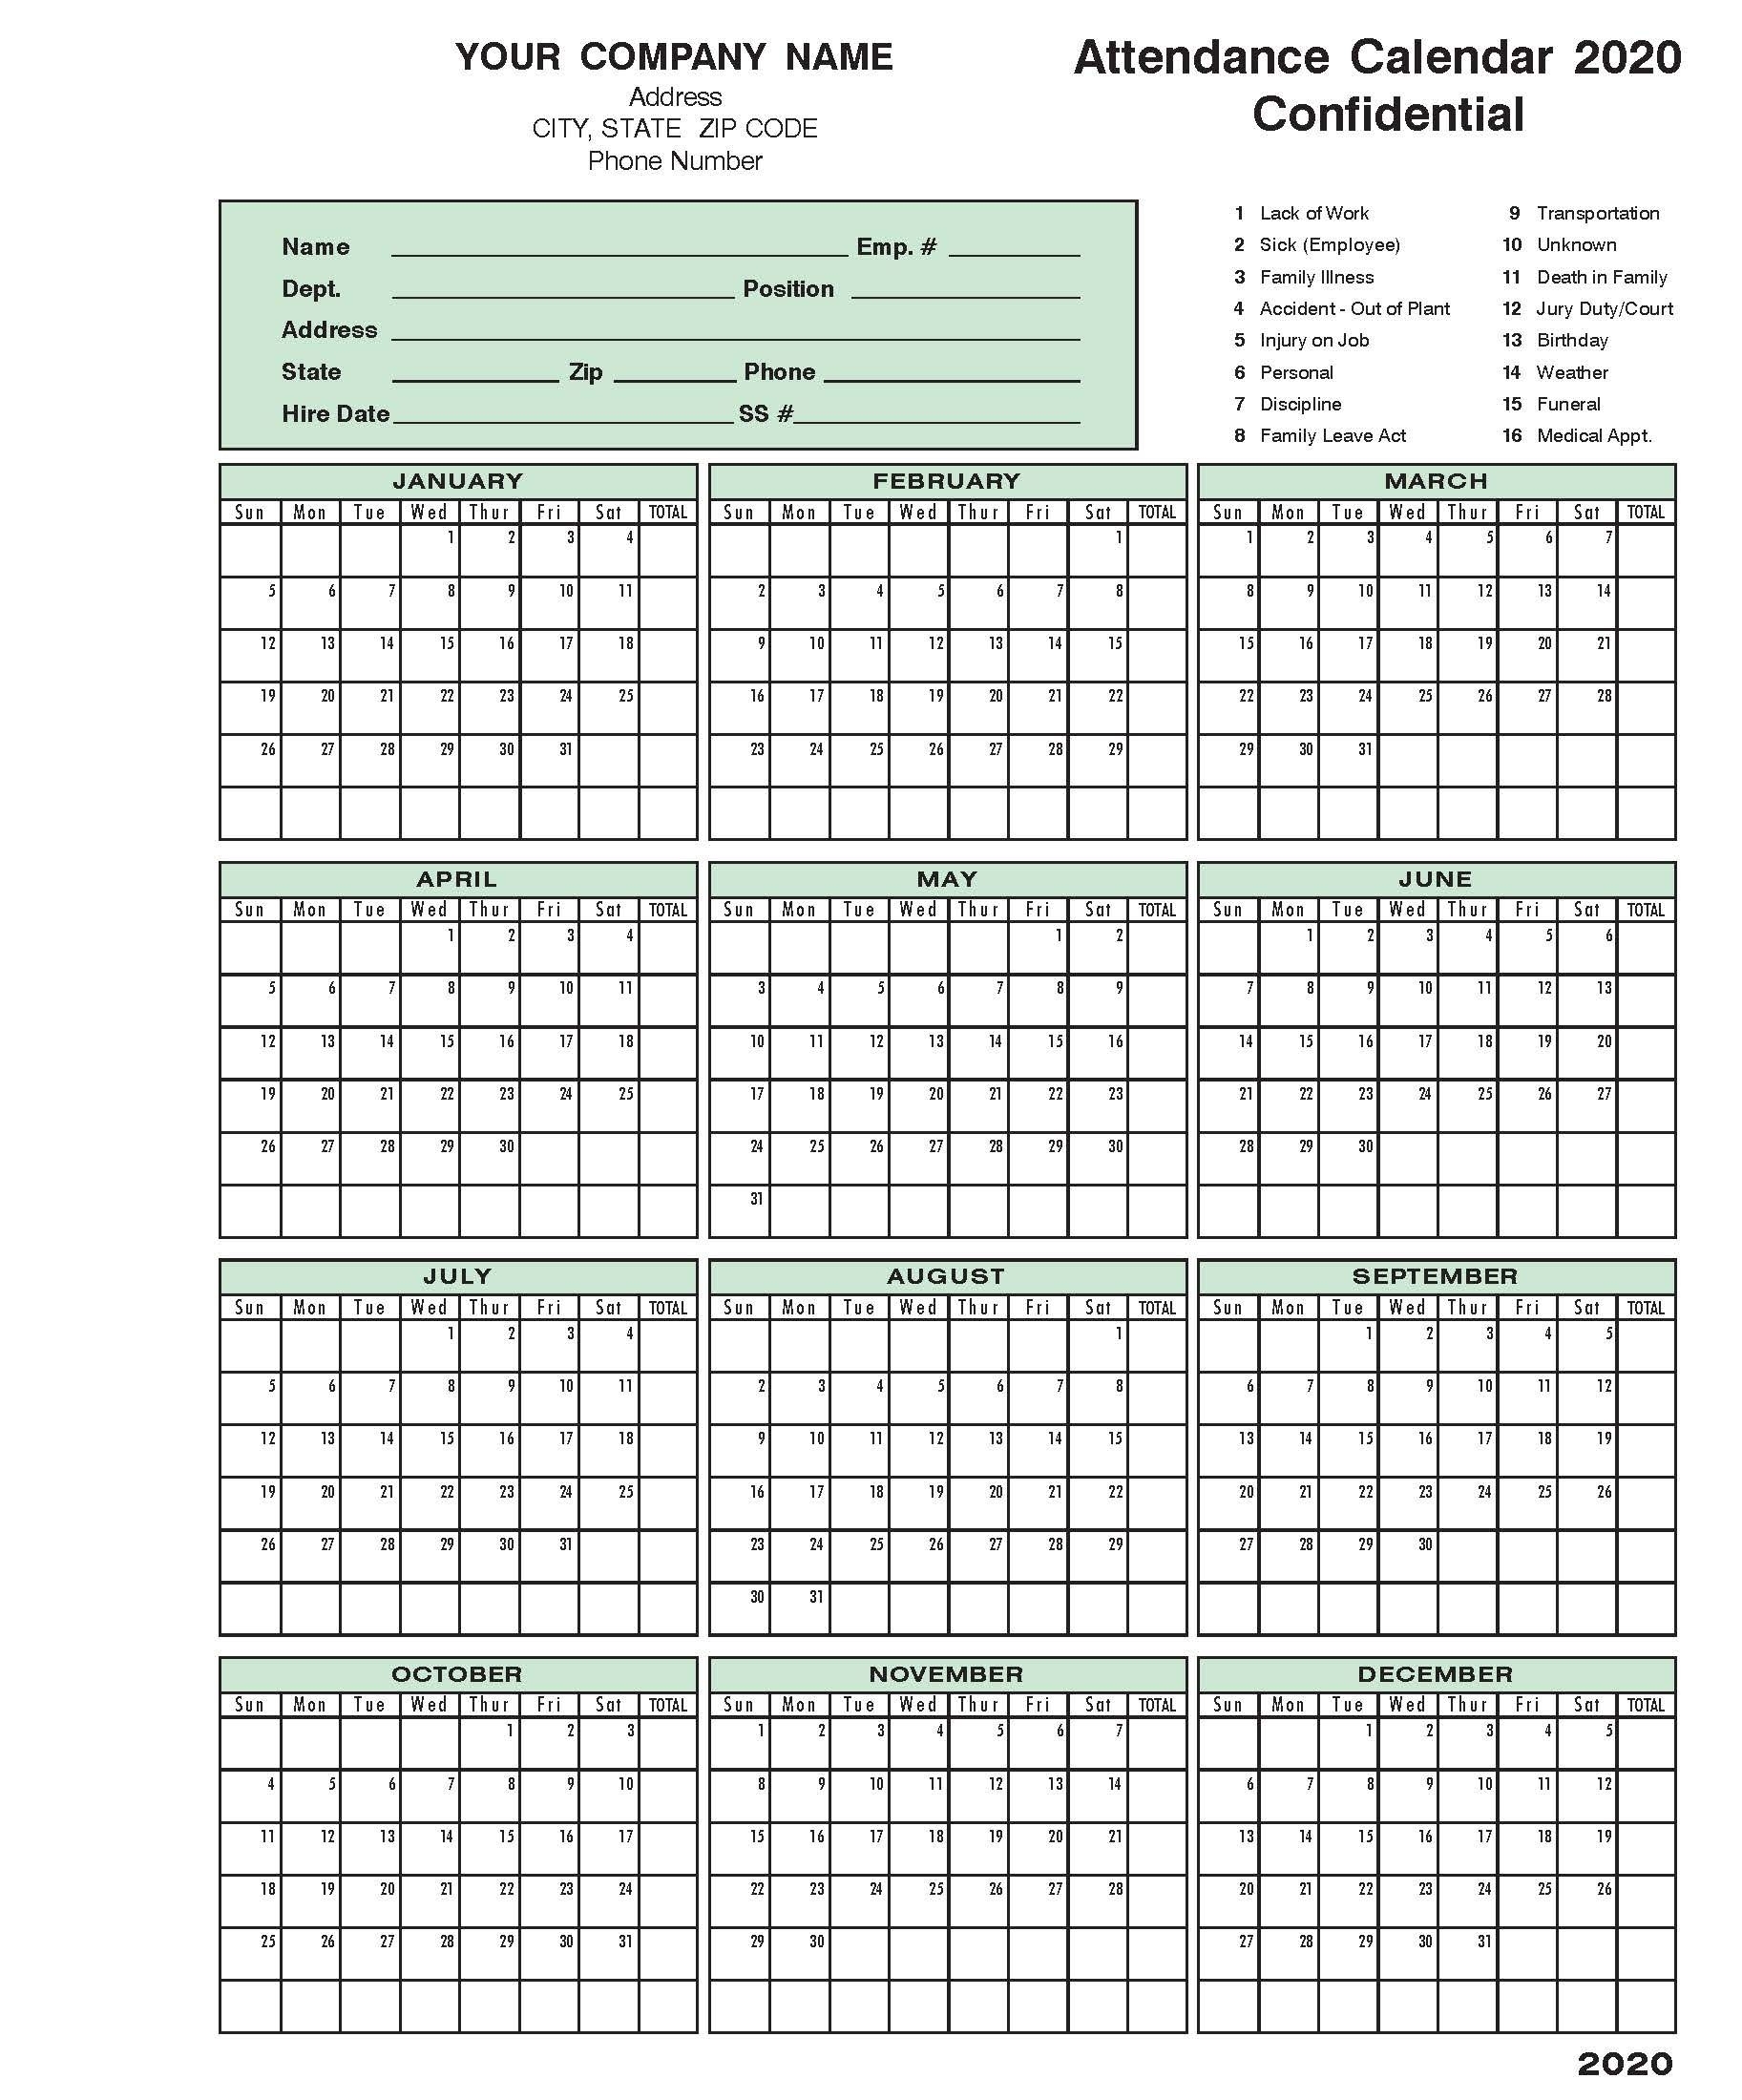 2020 Attendance Calendar In 2020 | Calendar Template inside Printable Attendance Calendar For 2020